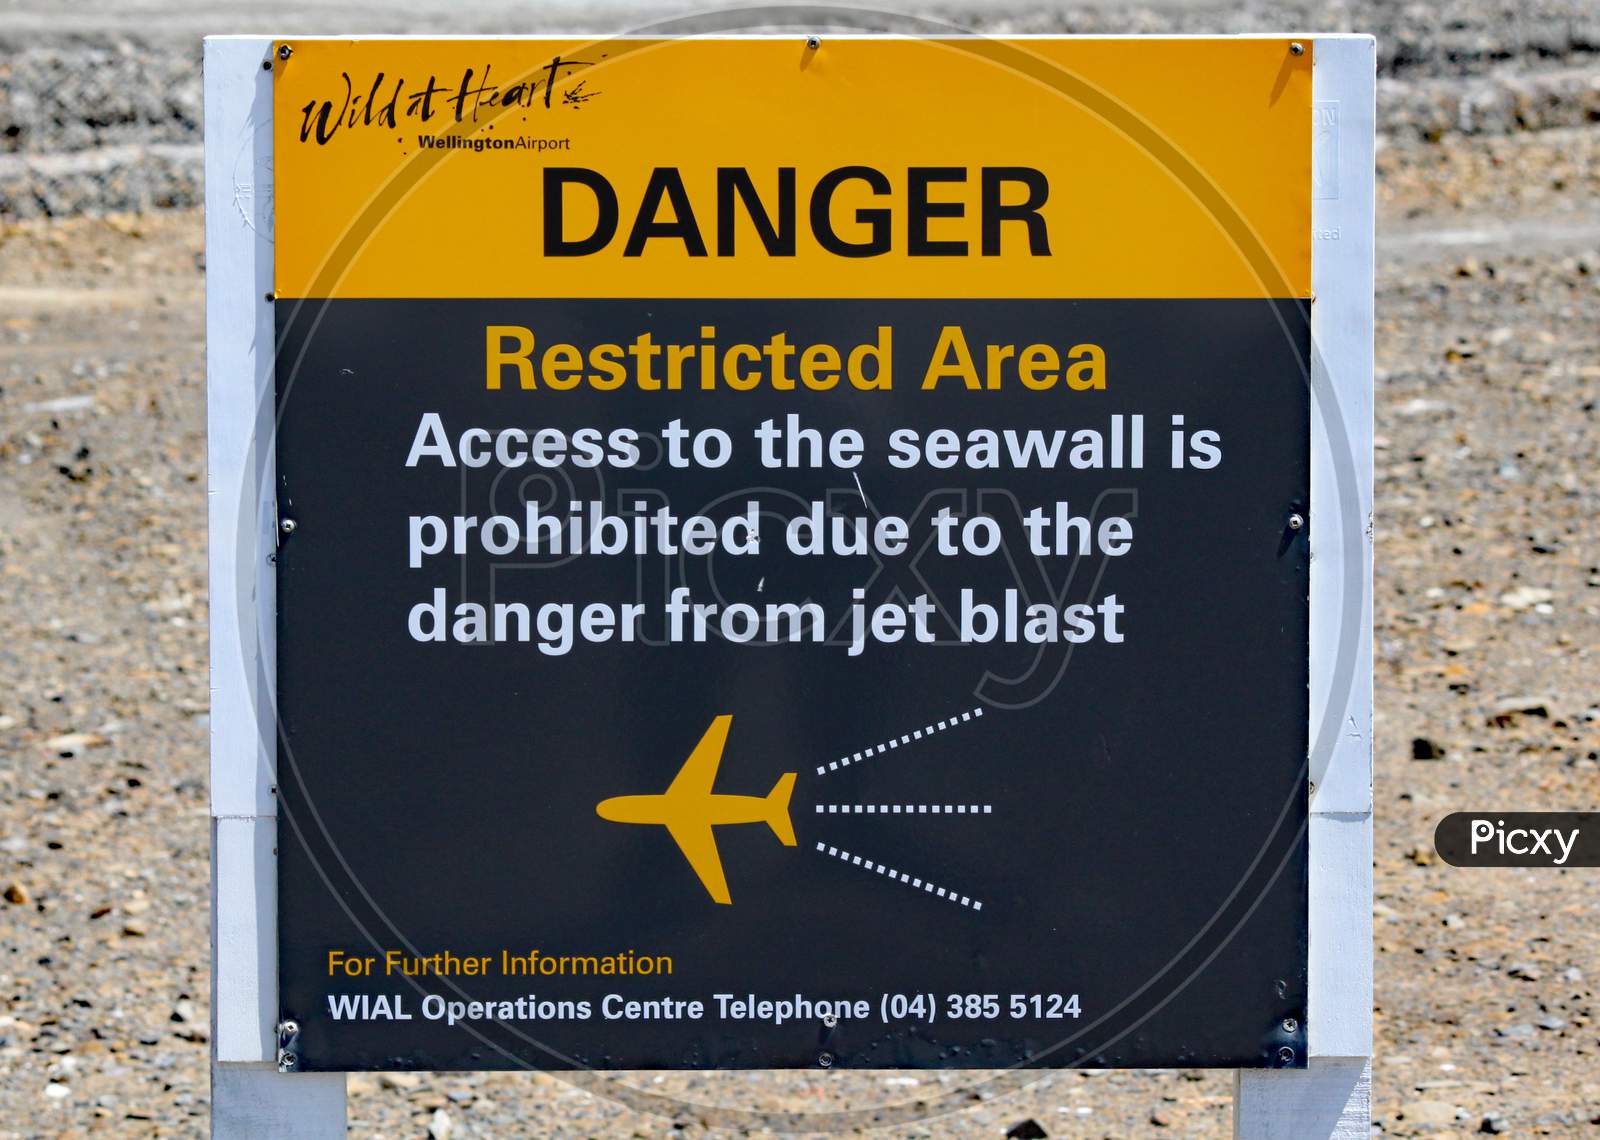 travel warning wellington